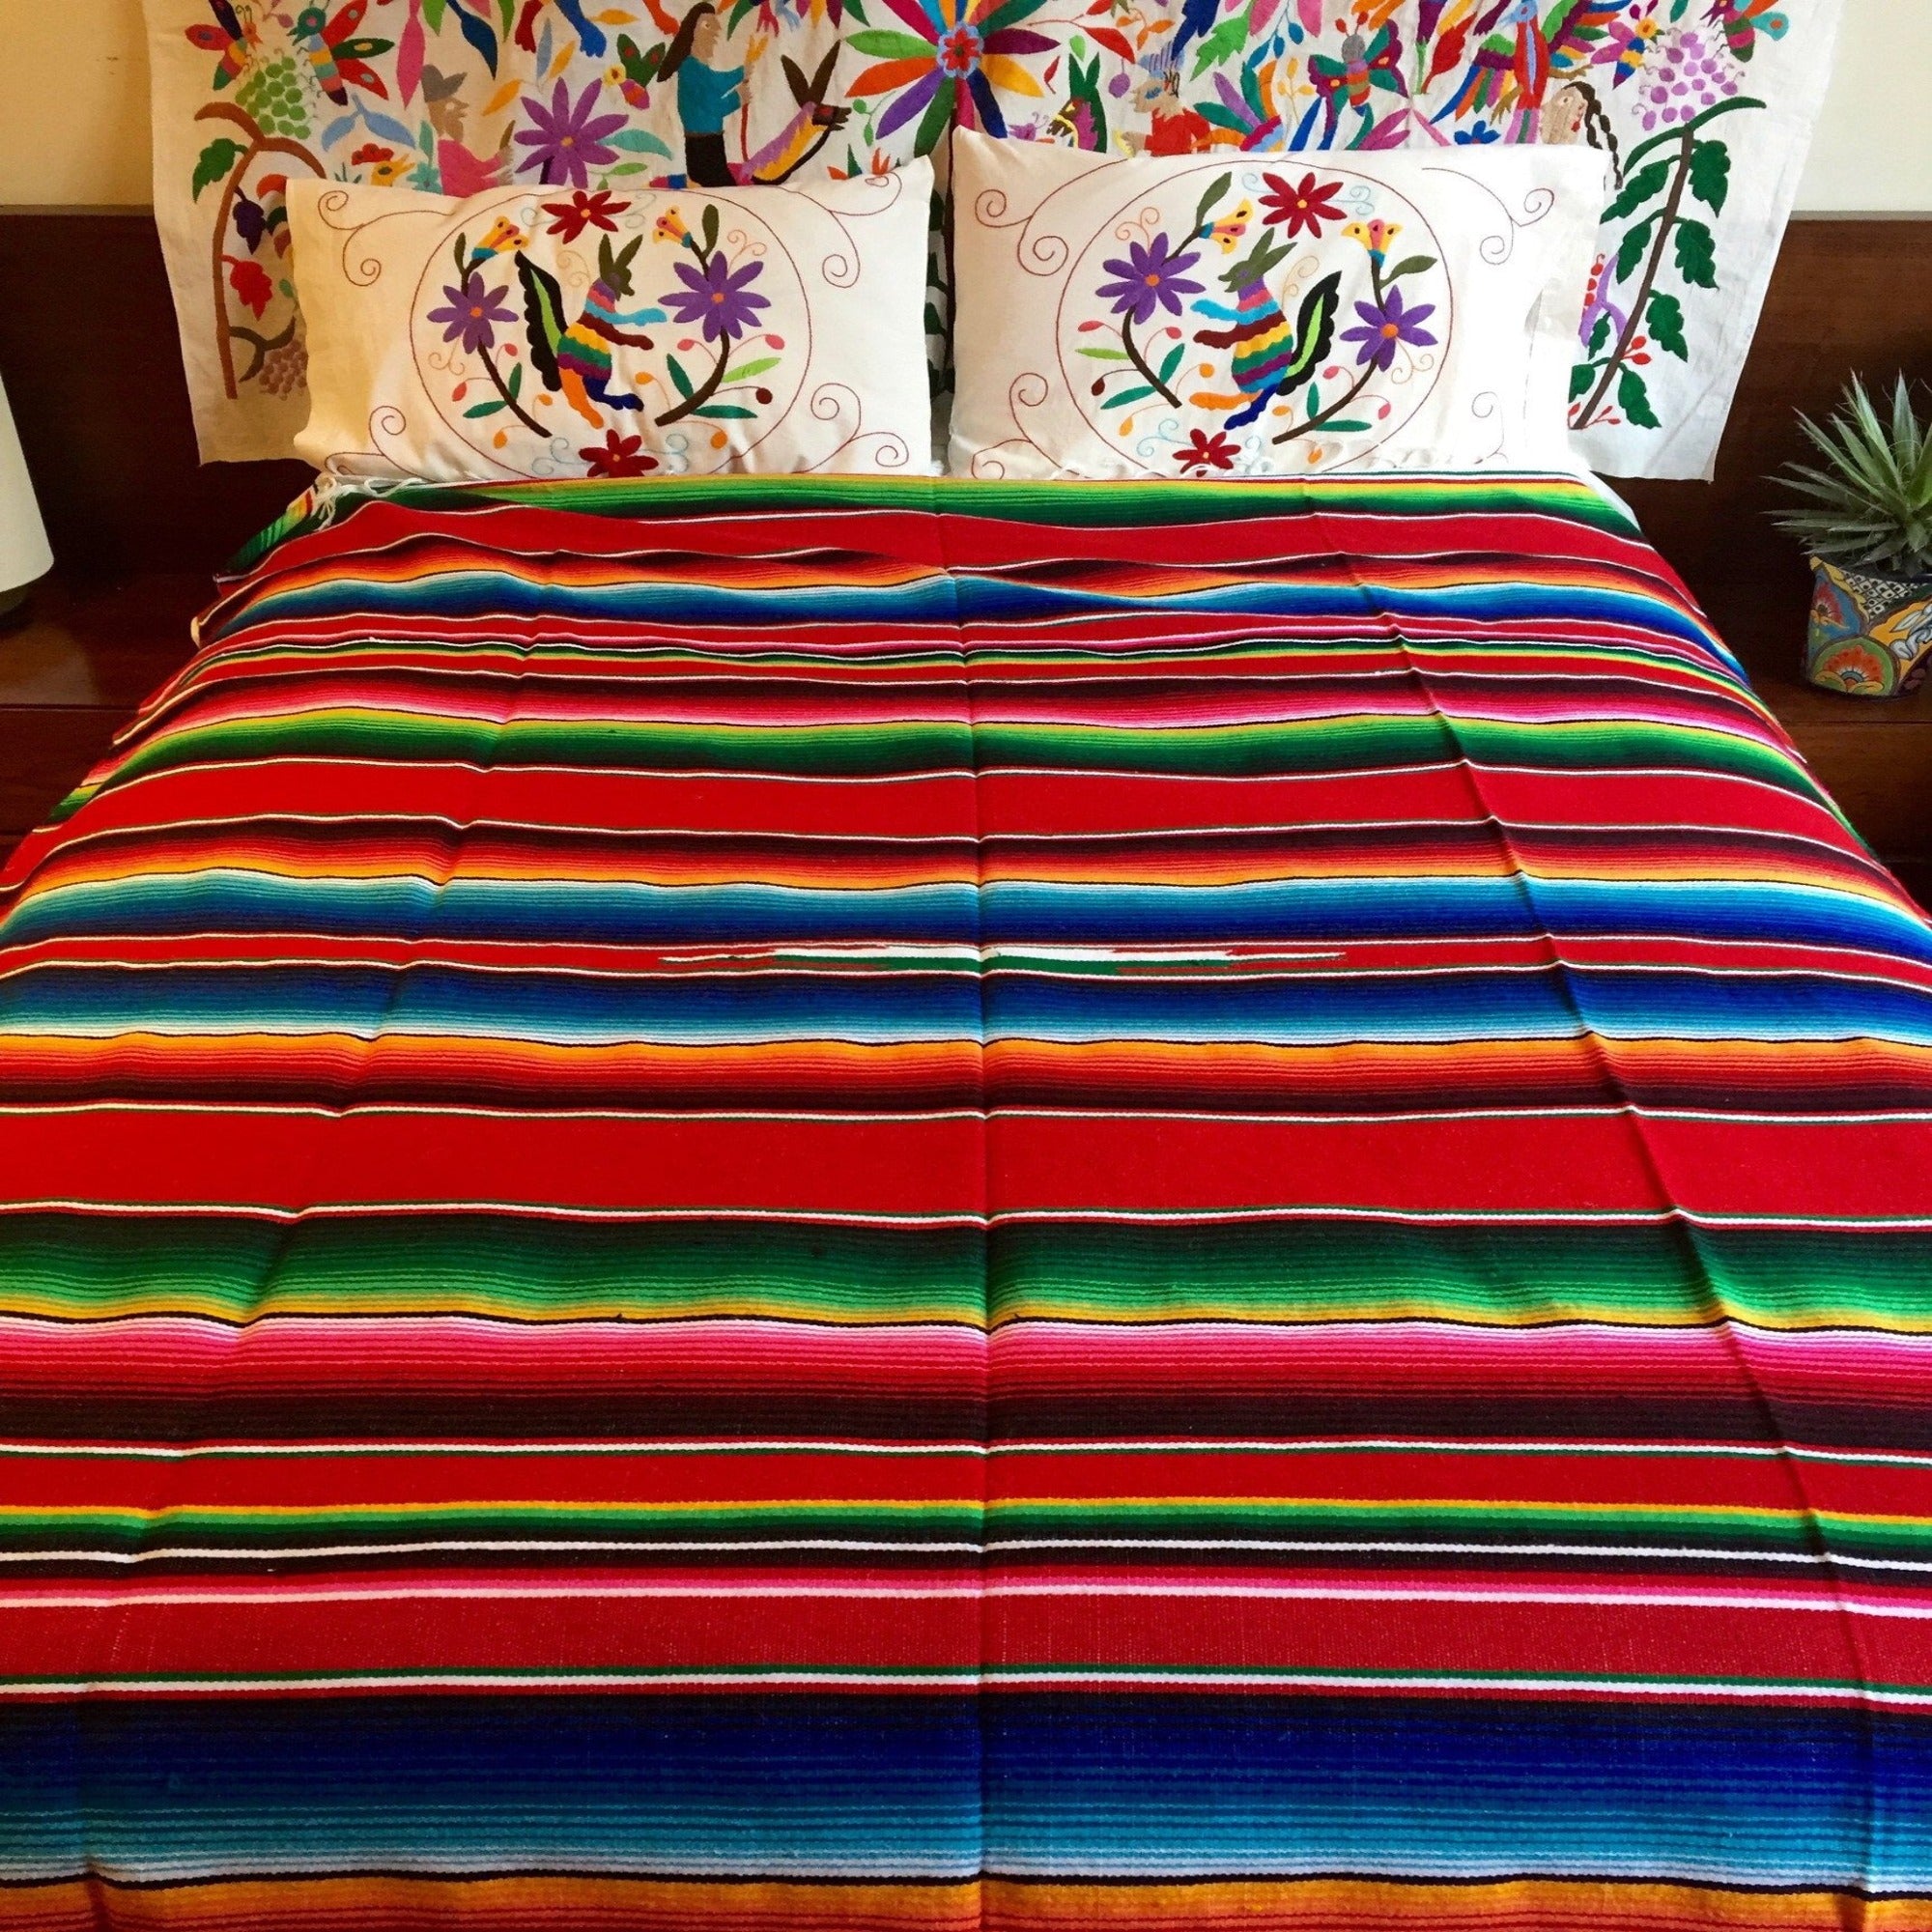 Handwoven tablecloth/blanket from Oaxaca, Mexico 'Serape'